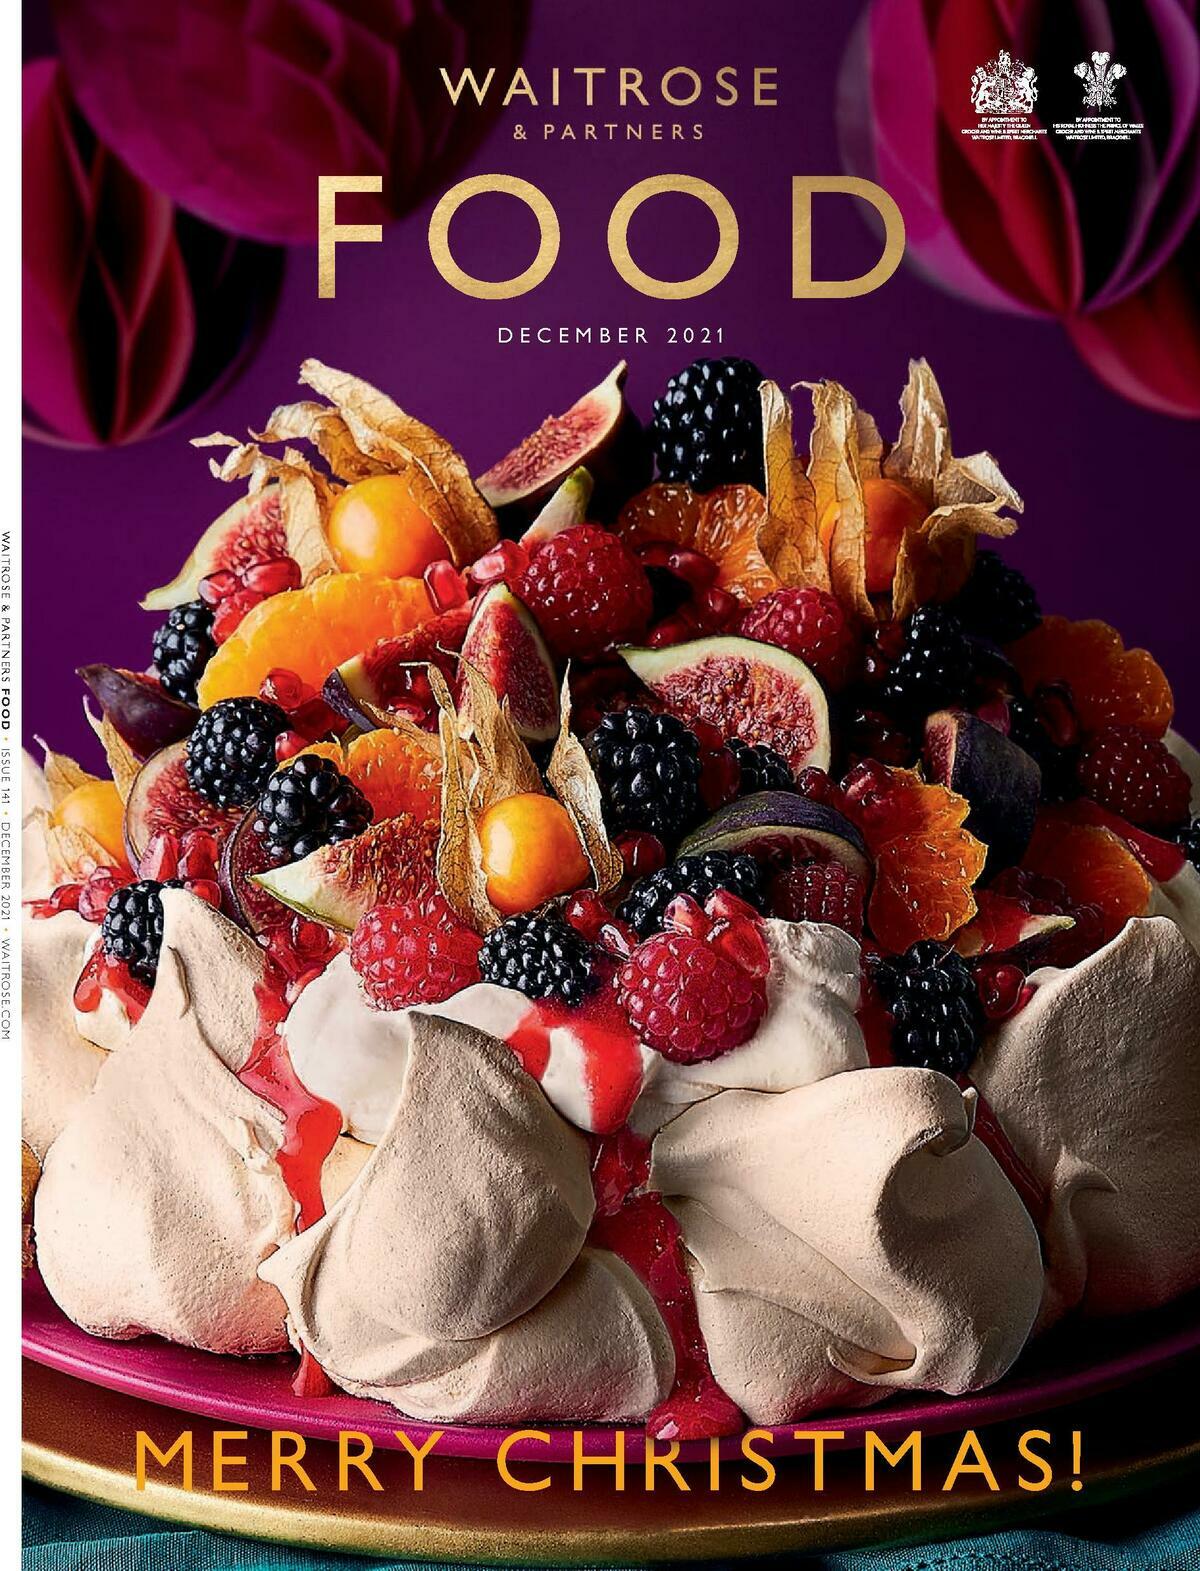 Waitrose Food Magazine December Offers from December 1